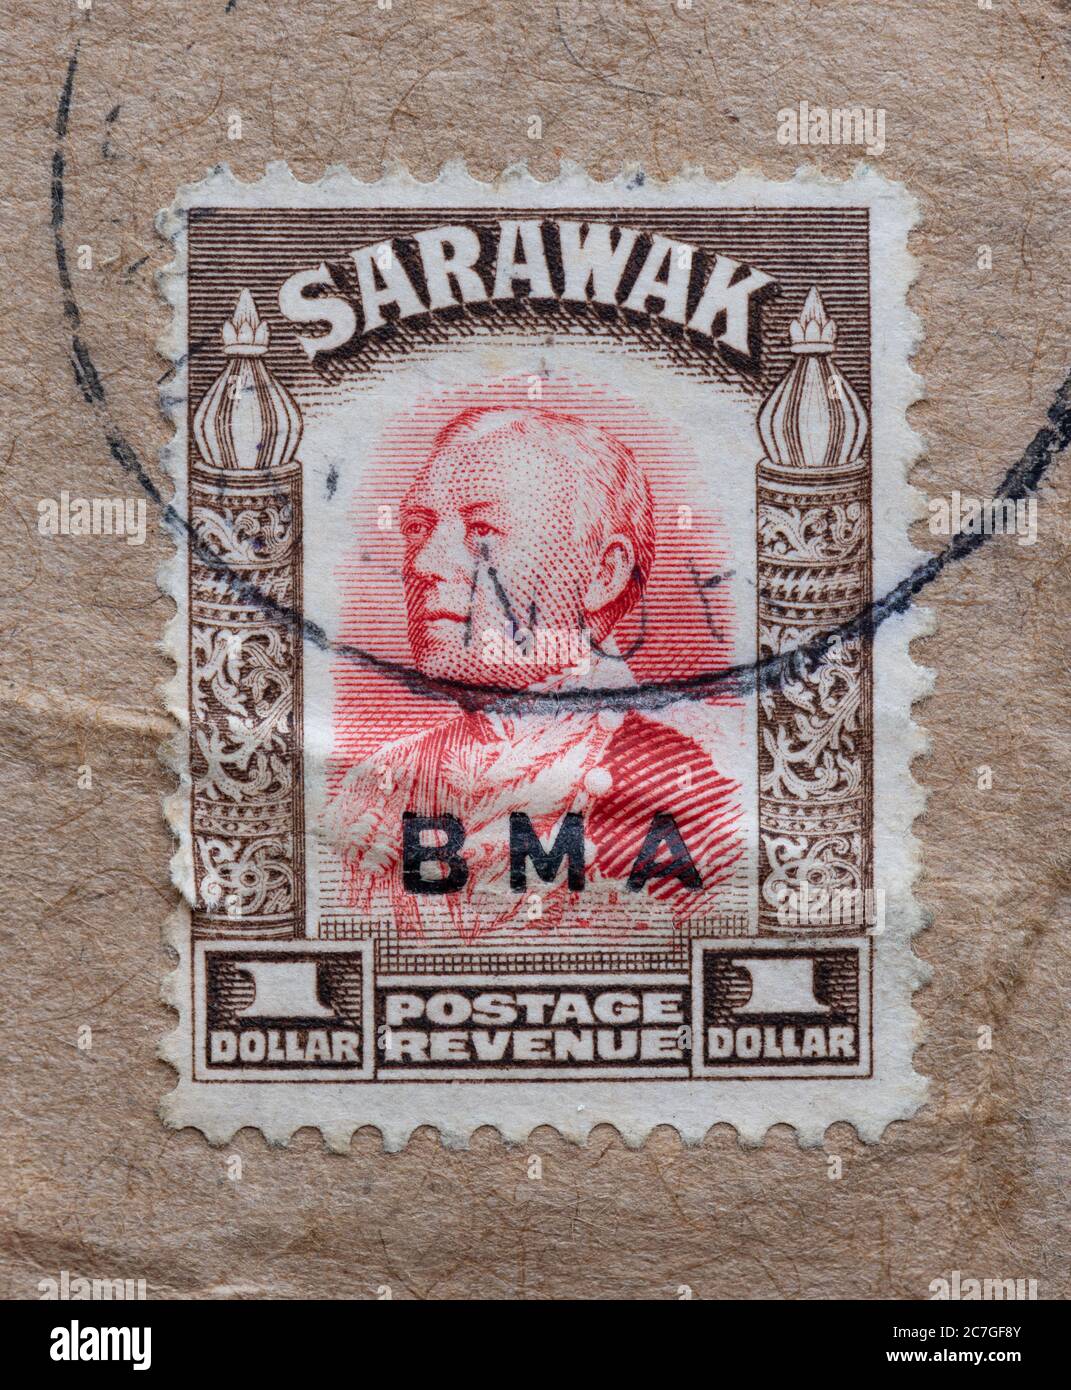 Sarawak (Malaysia, Borneo) postage stamp with BMA overprint showing Sir Charles Vyner de Windt Brooke the last rajah of Sarawak Stock Photo